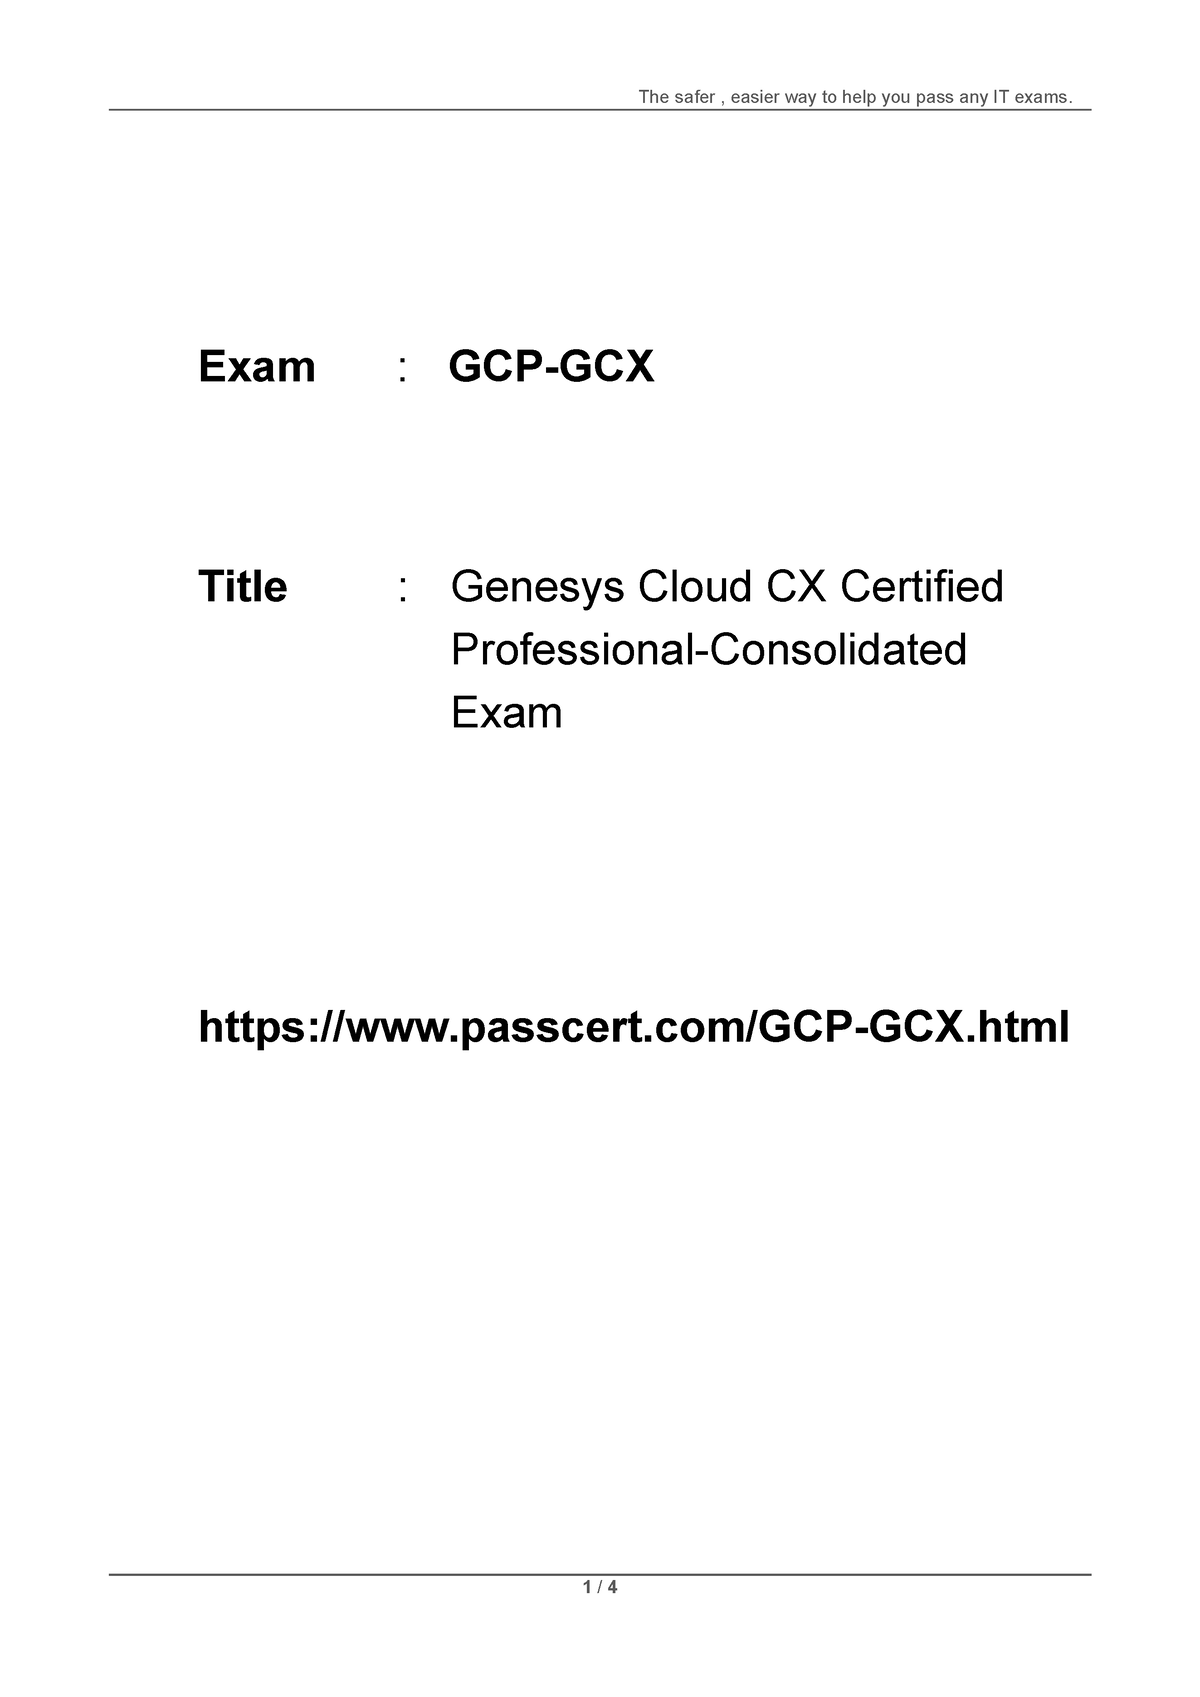 GCP-GCX Tests